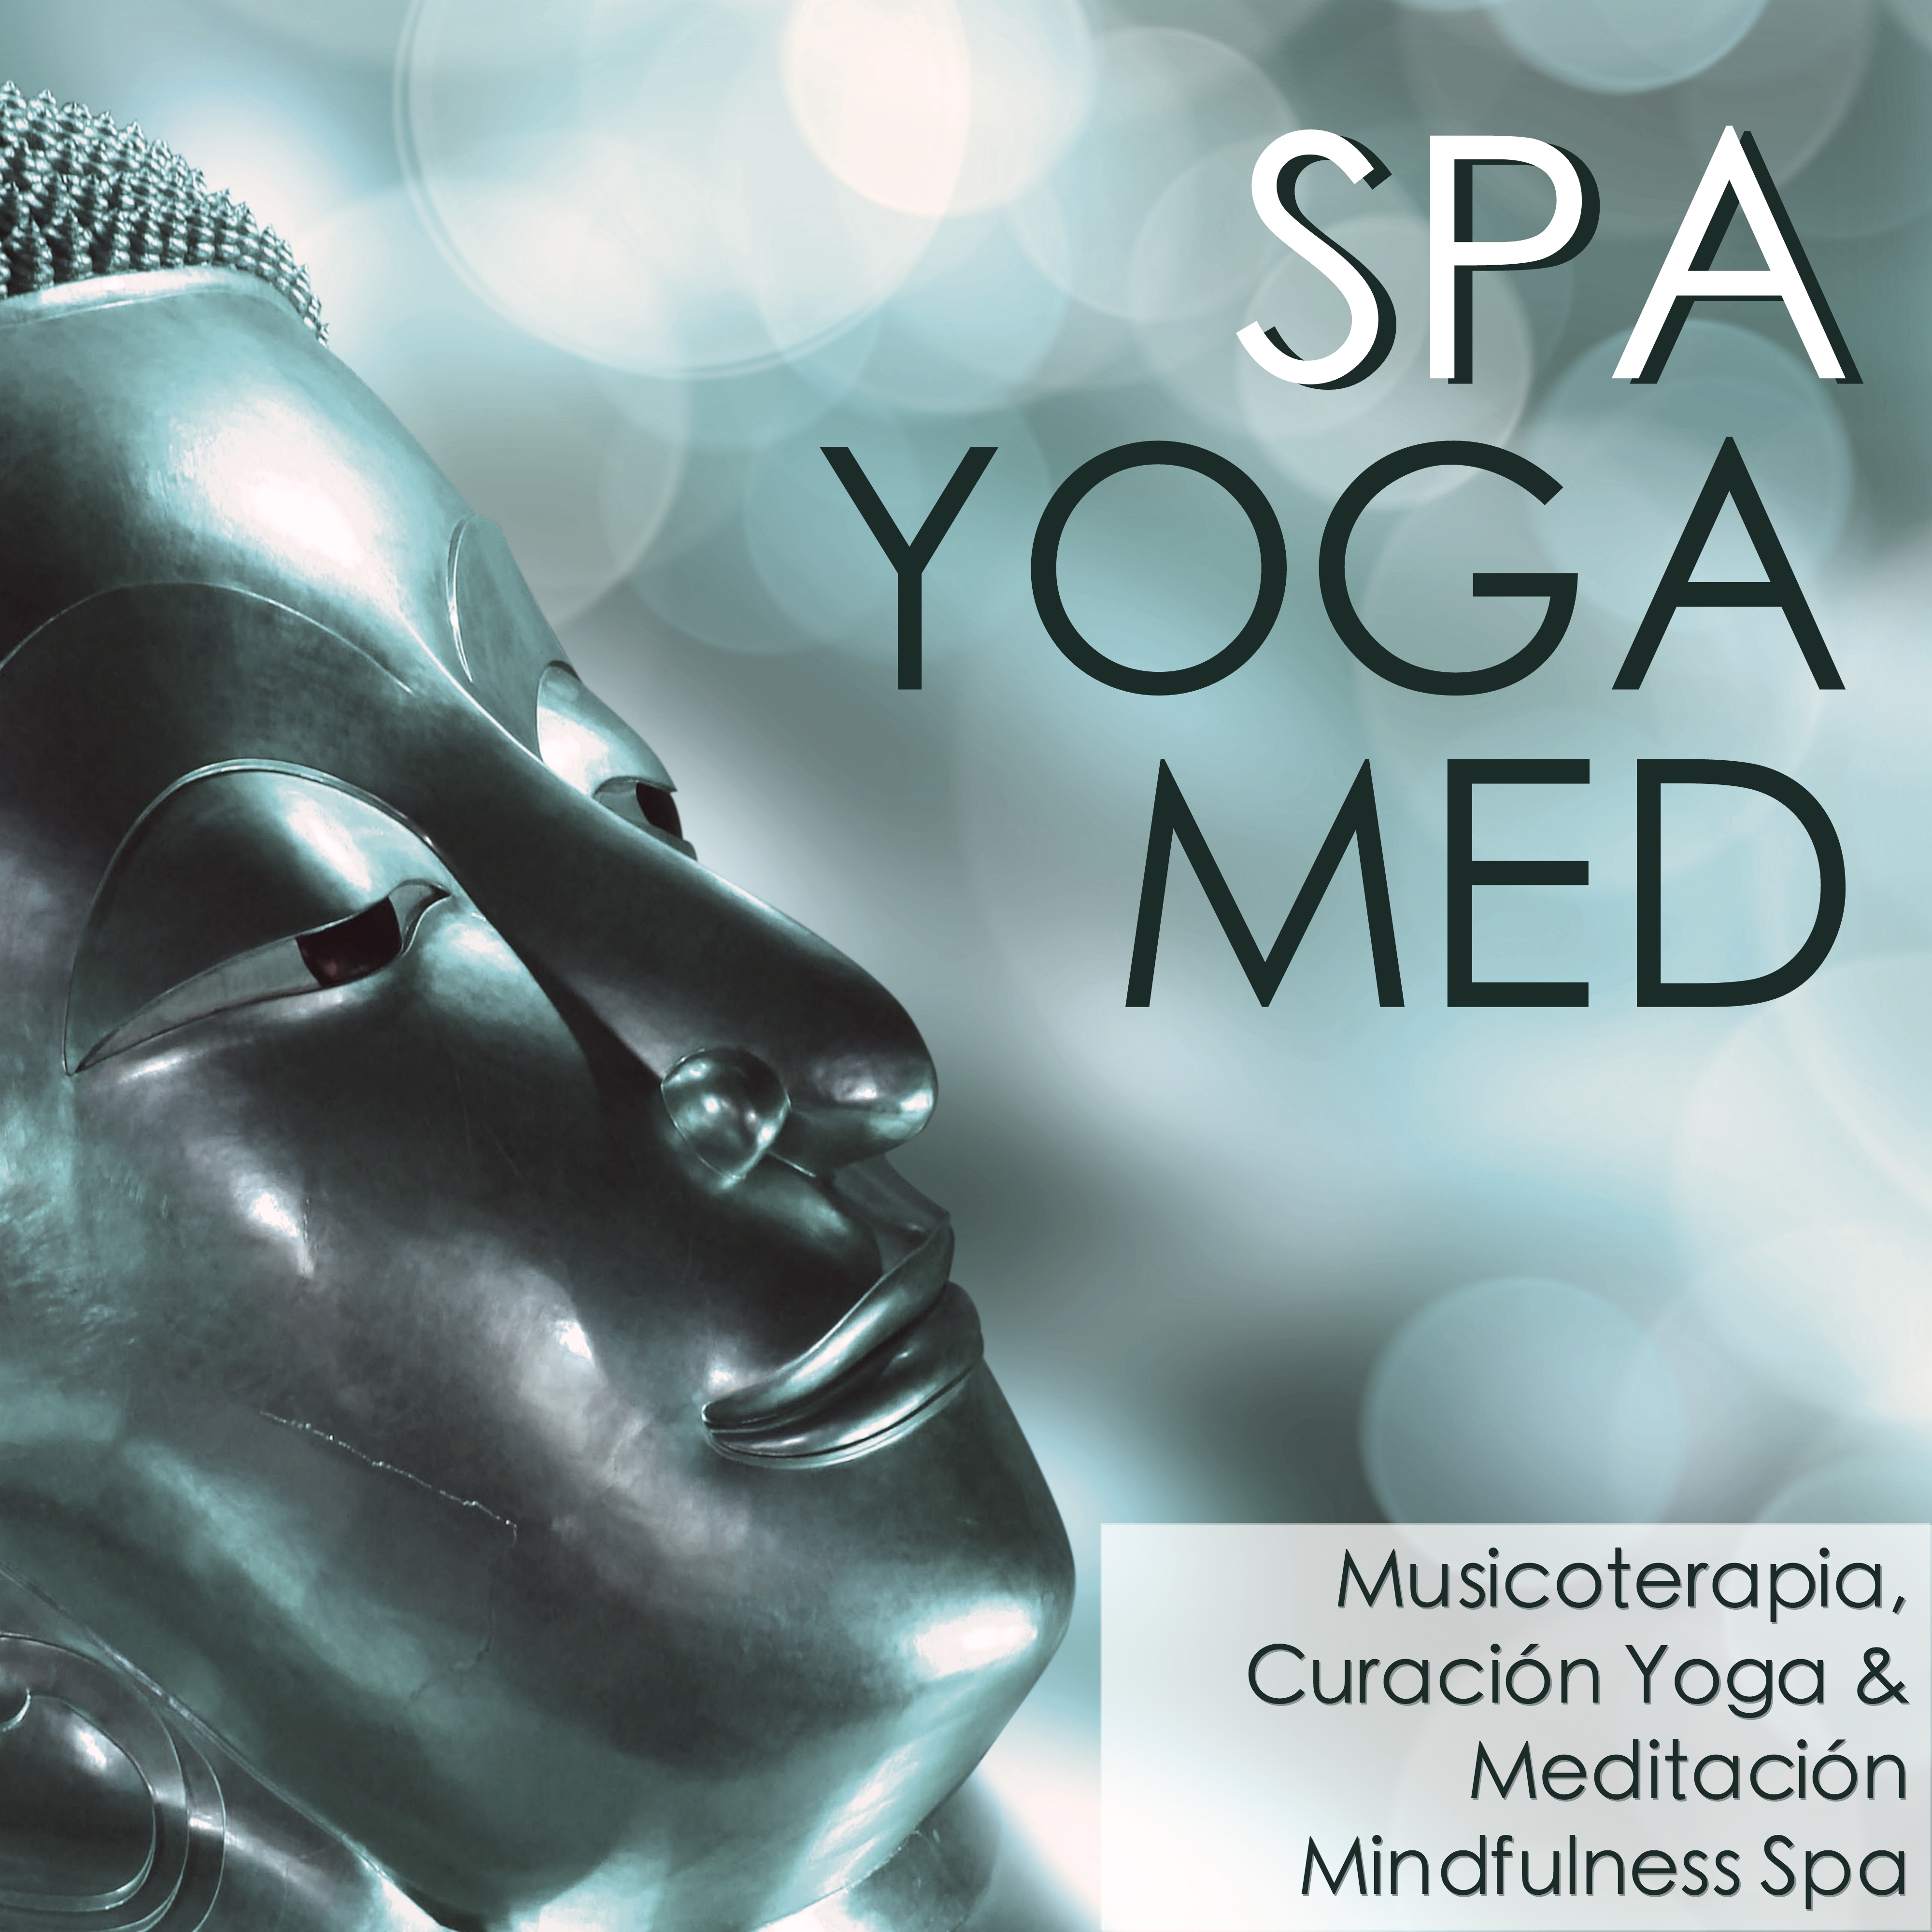 Spa Yog Med - Sonidos de la Naturaleza y del Agua para Musicoterapia, Curación Yoga & Meditación Mindfulness Spa, Píldoras de Música Relajantes